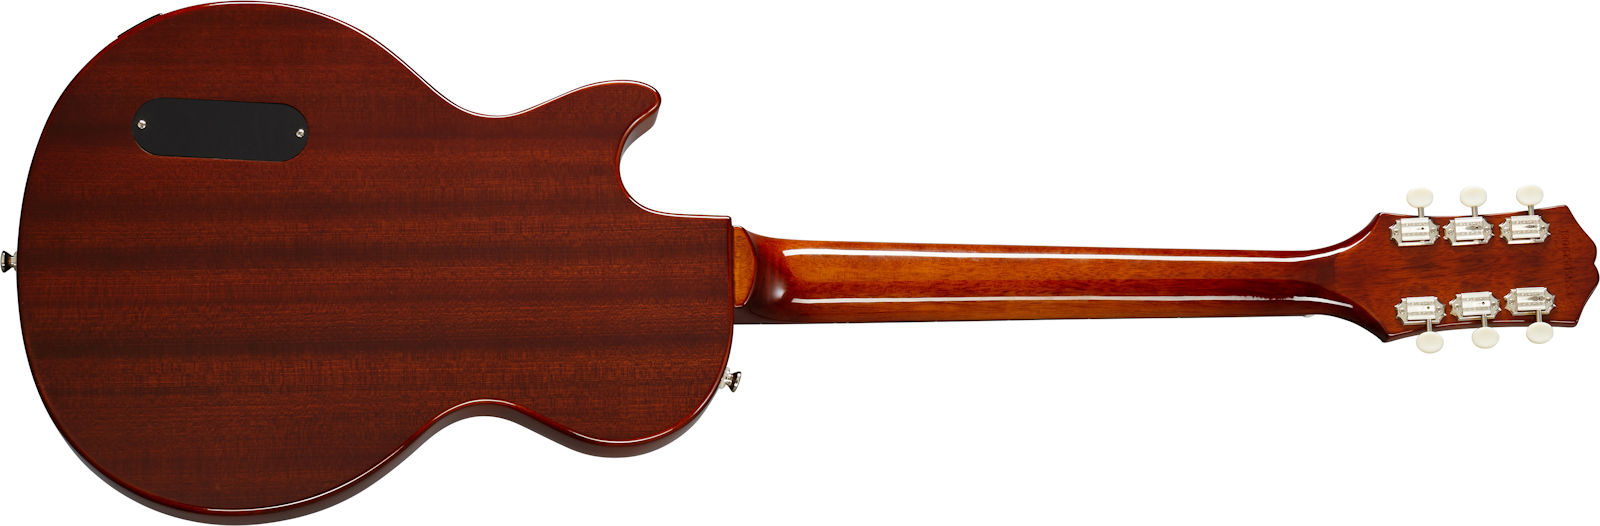 Epiphone Les Paul Junior P90 Ht Rw - Vintage Sunburst - Enkel gesneden elektrische gitaar - Variation 1